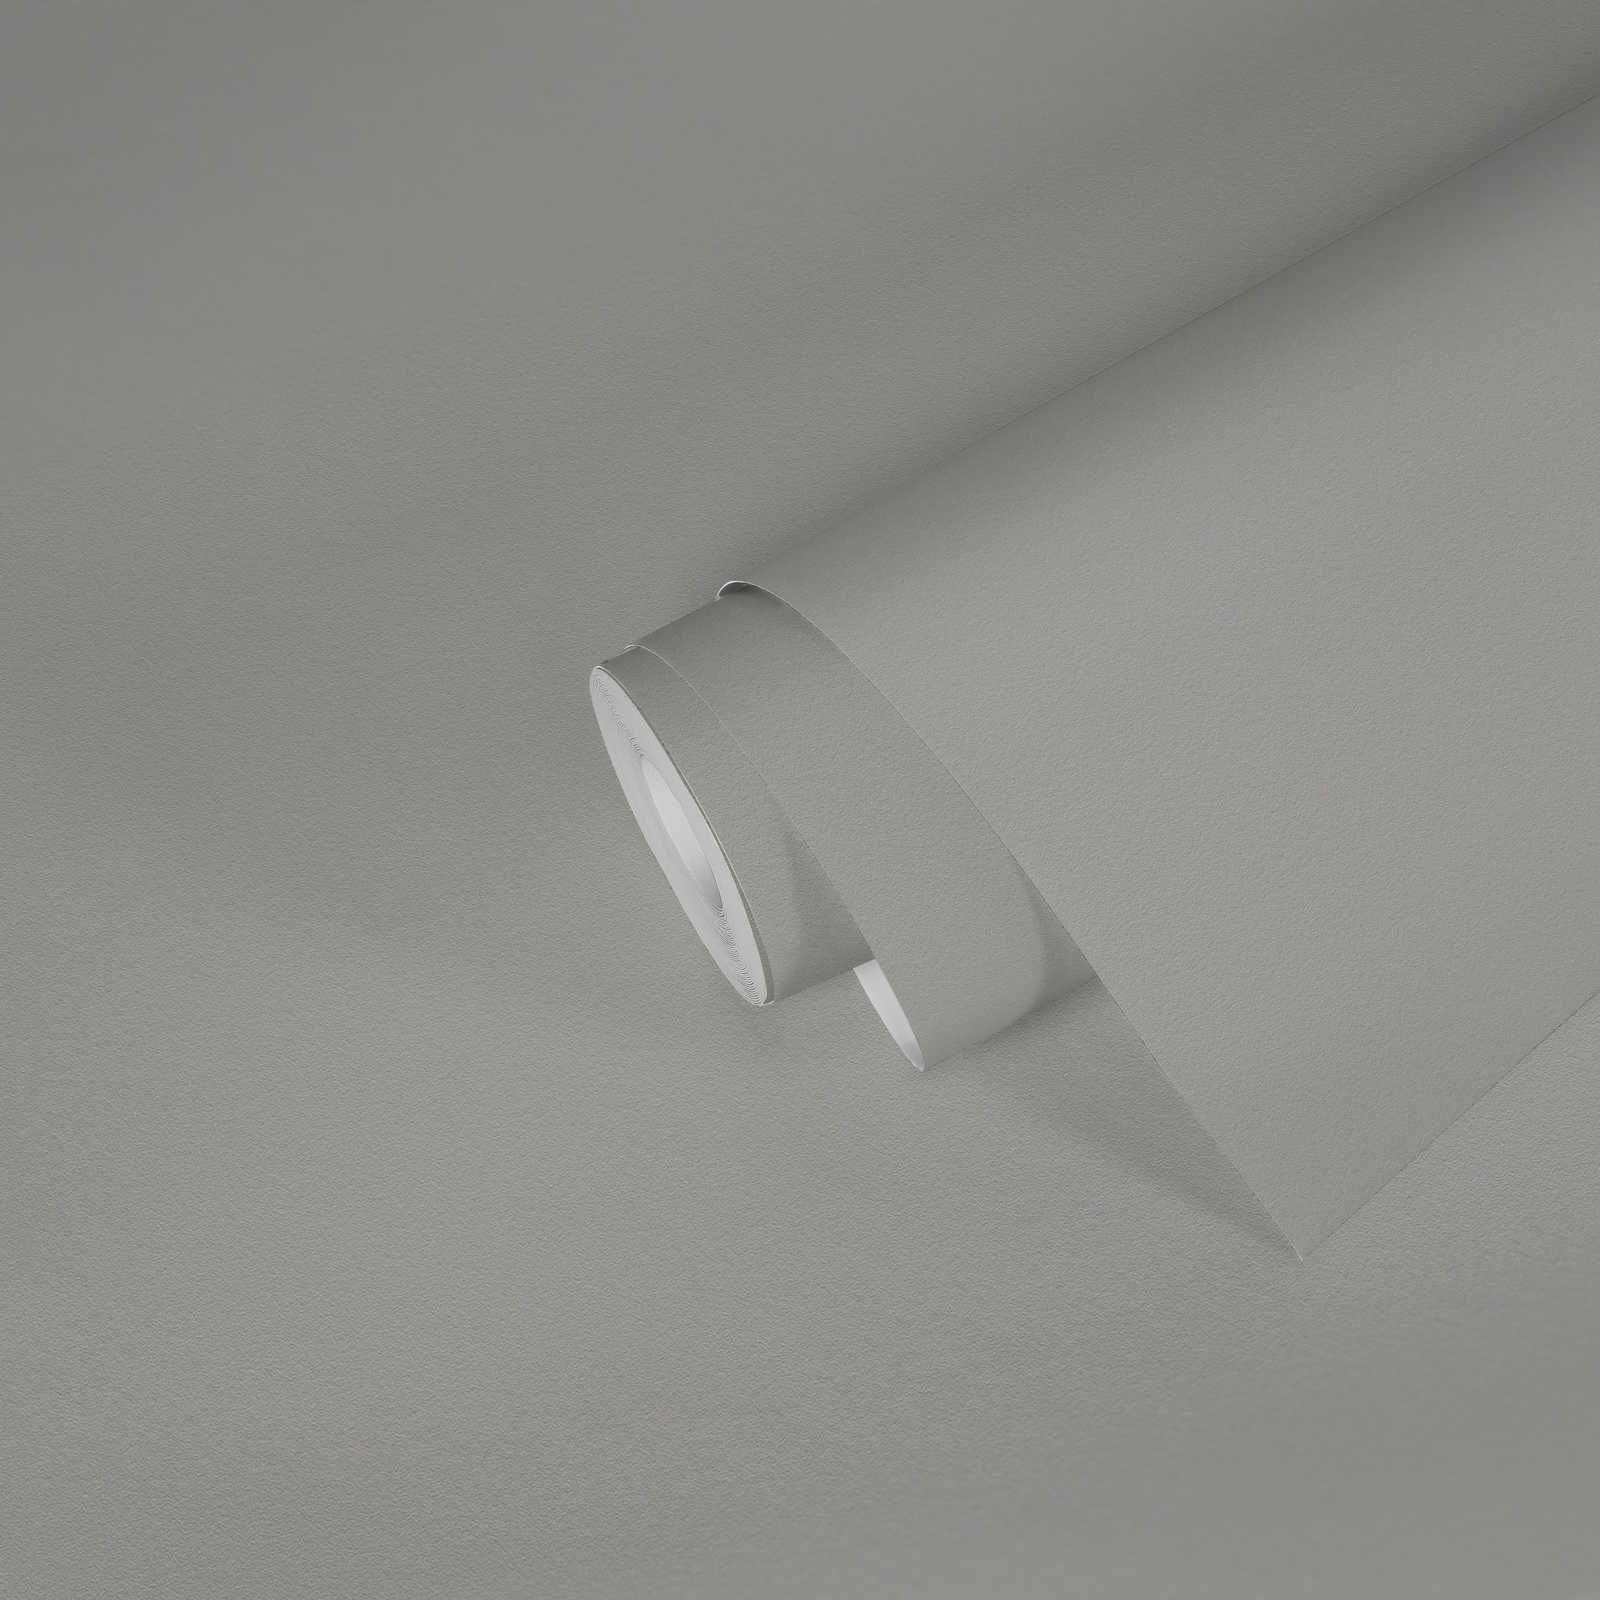             Unifarbene Tapete Grau mit matter Oberflächentextur
        